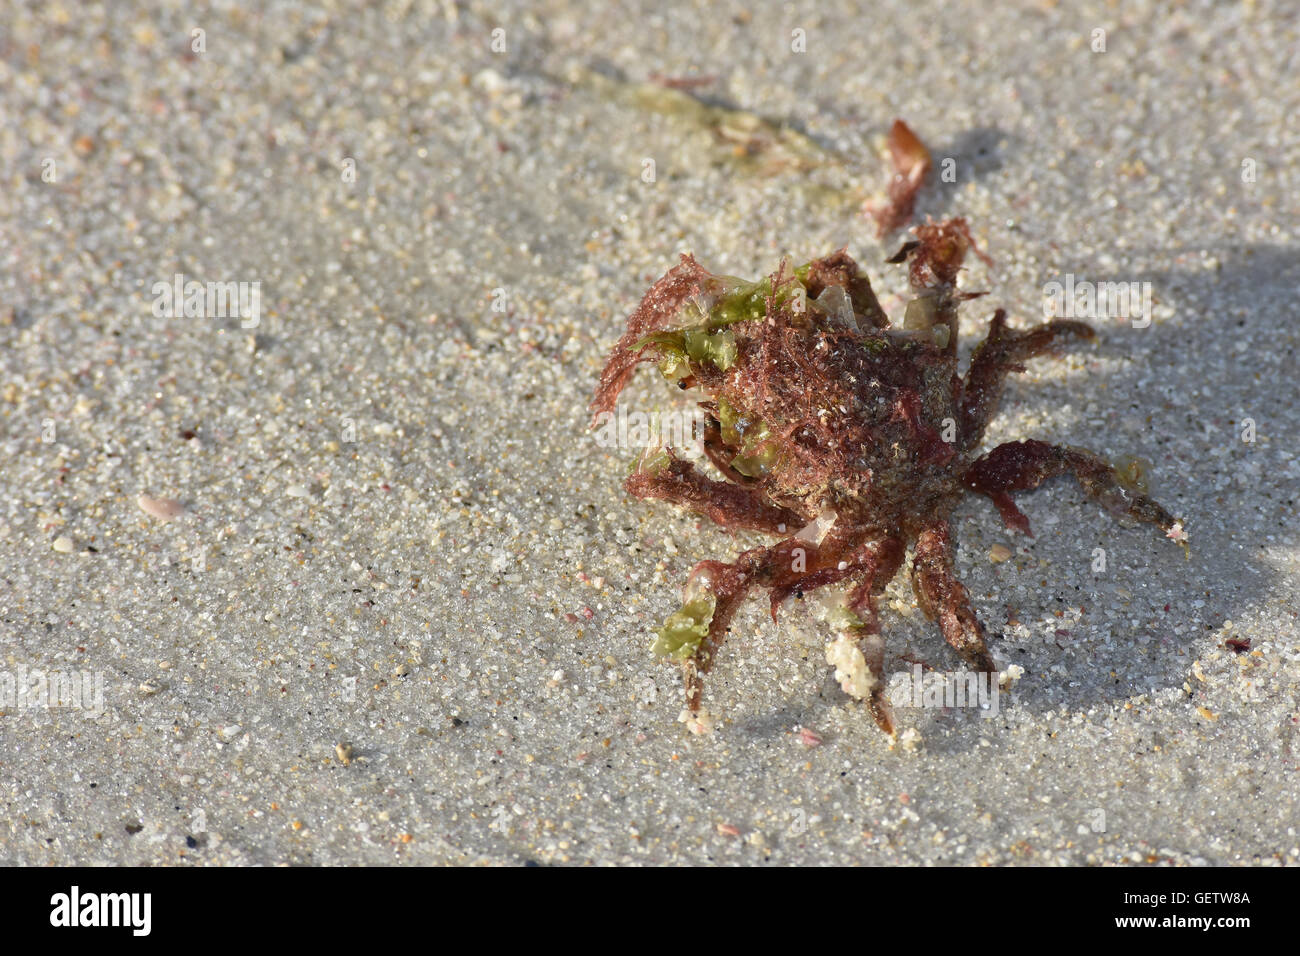 Camouflaged decorator crab on white sand Stock Photo